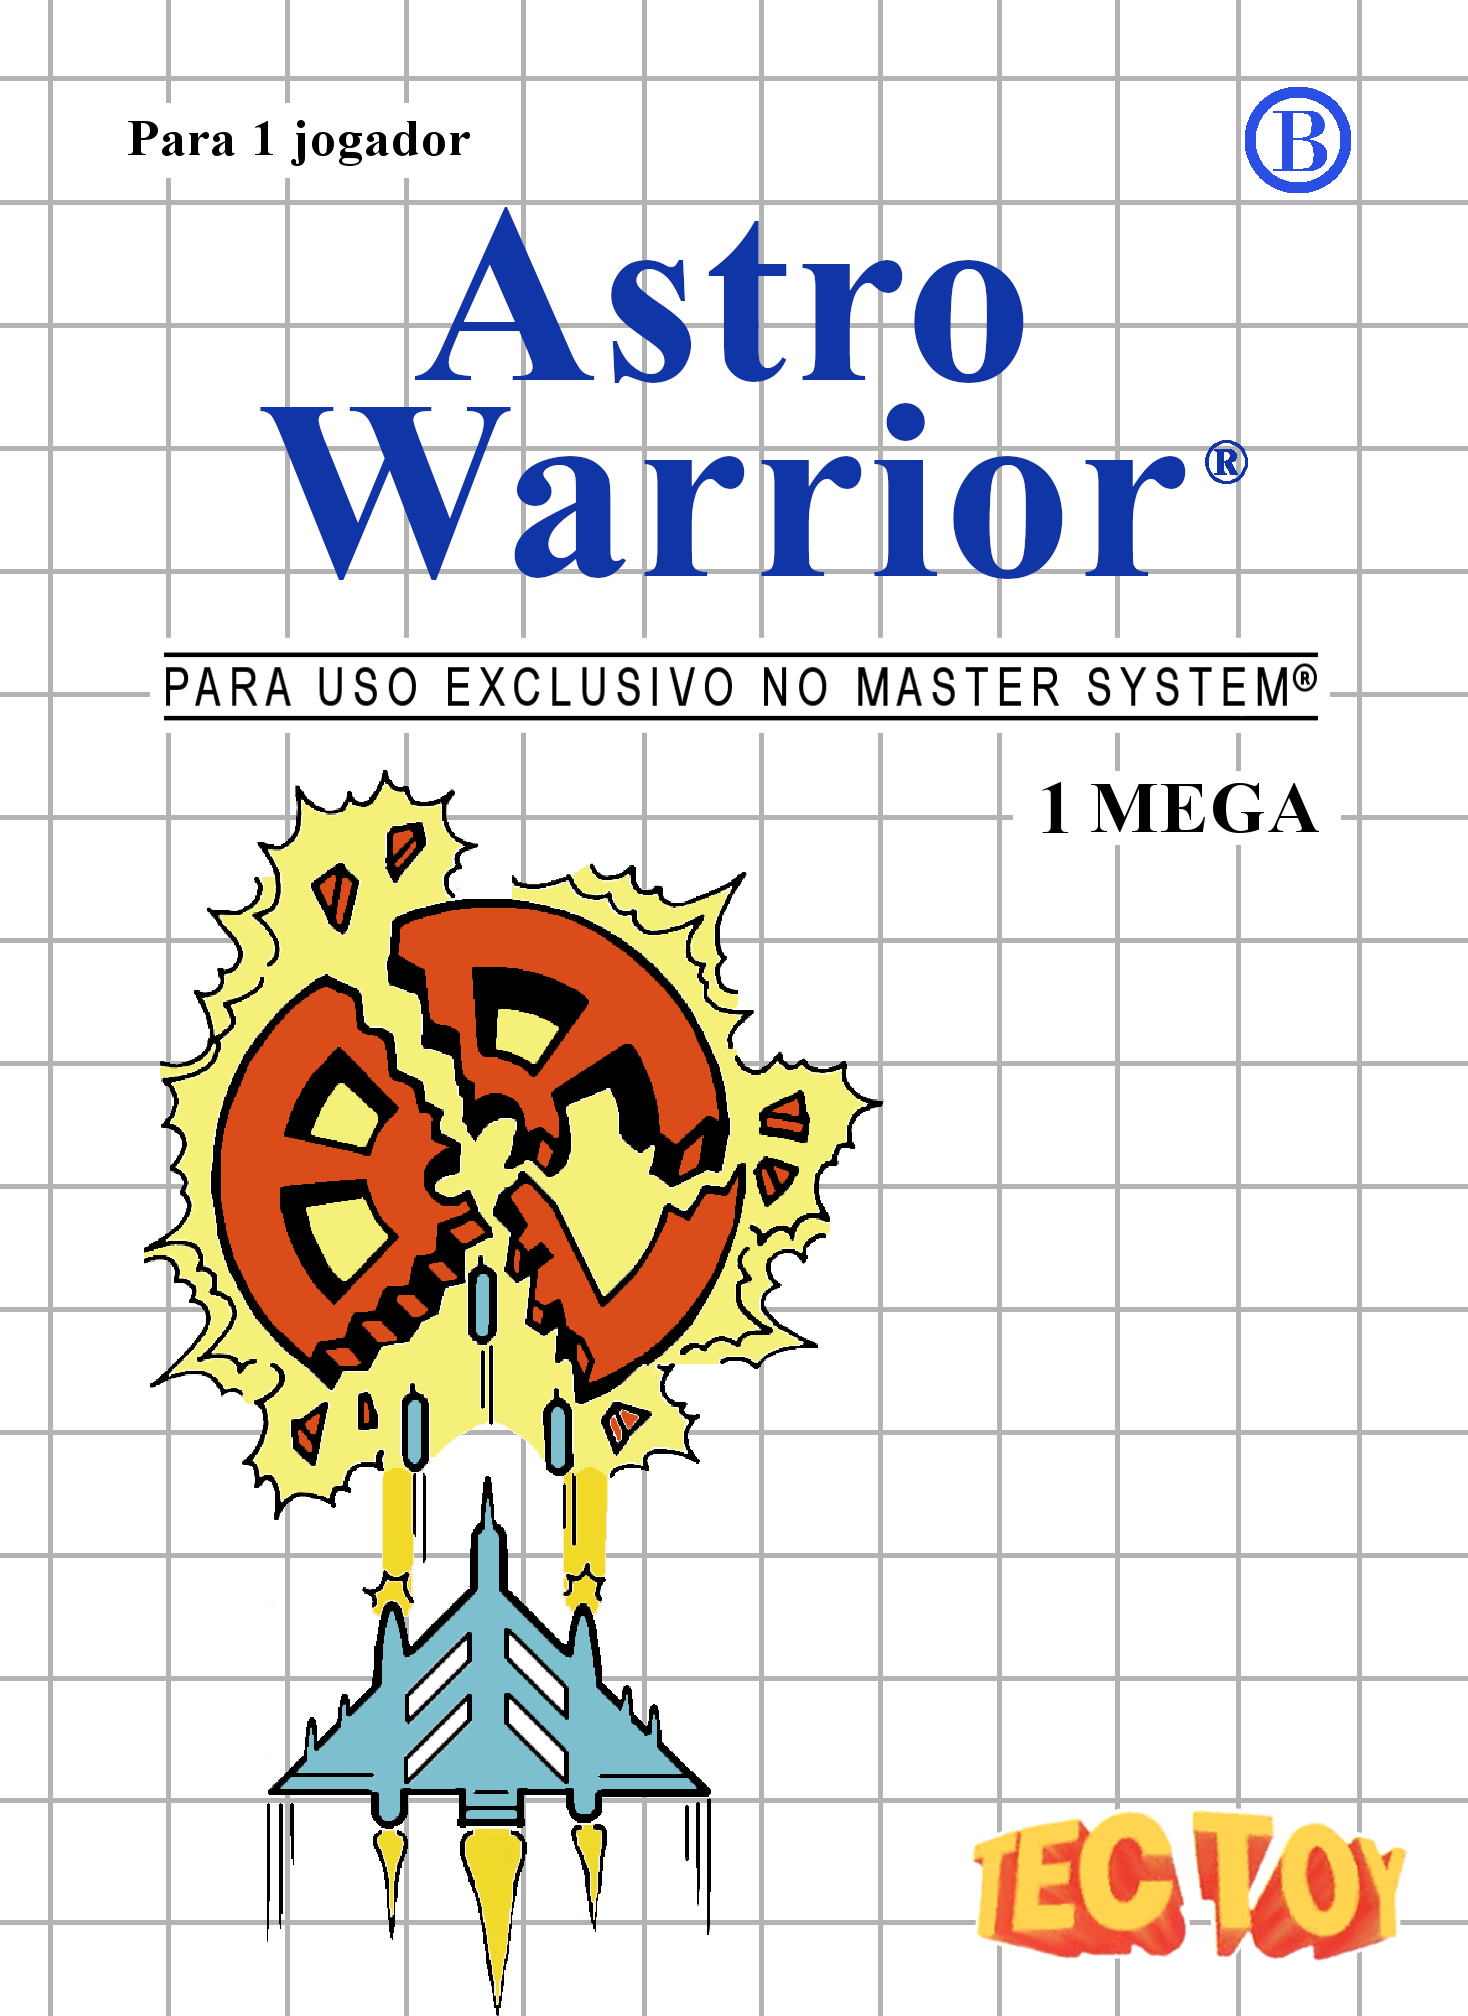 'Astro Warrior'